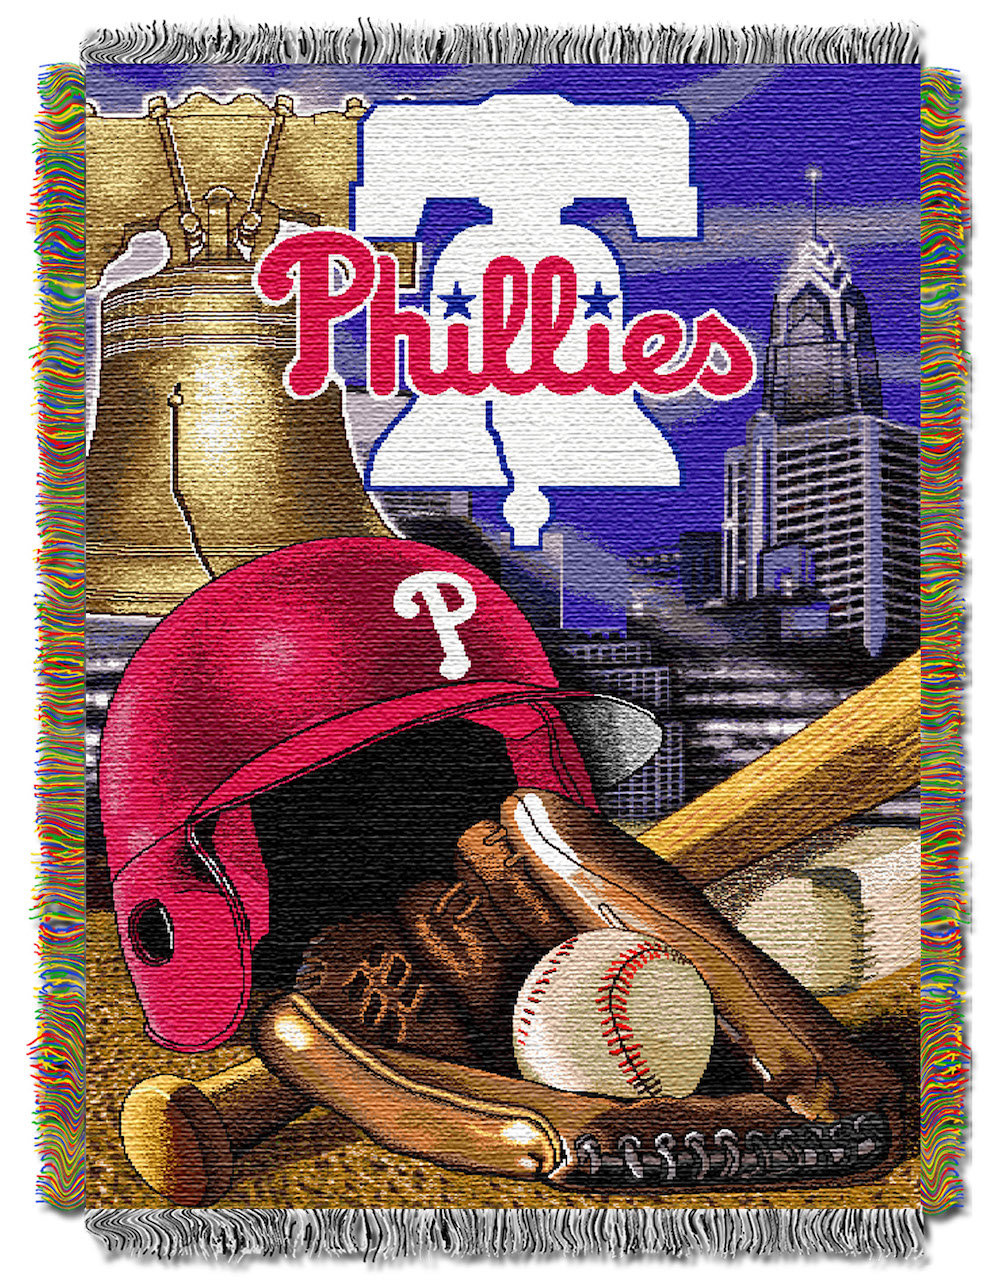 Philadelphia Phillies Home Field Advantage Series Tapestry Blanket 48 x 60